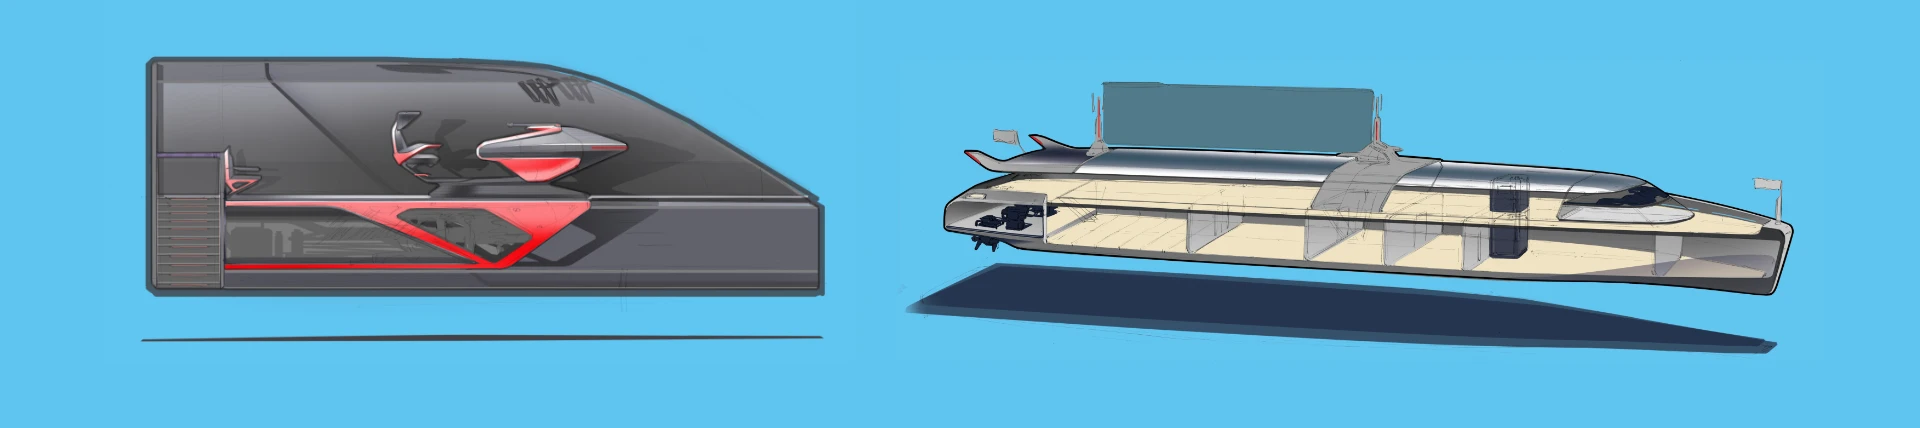 FDM River Boat concept sketches_Design by Werkemotion